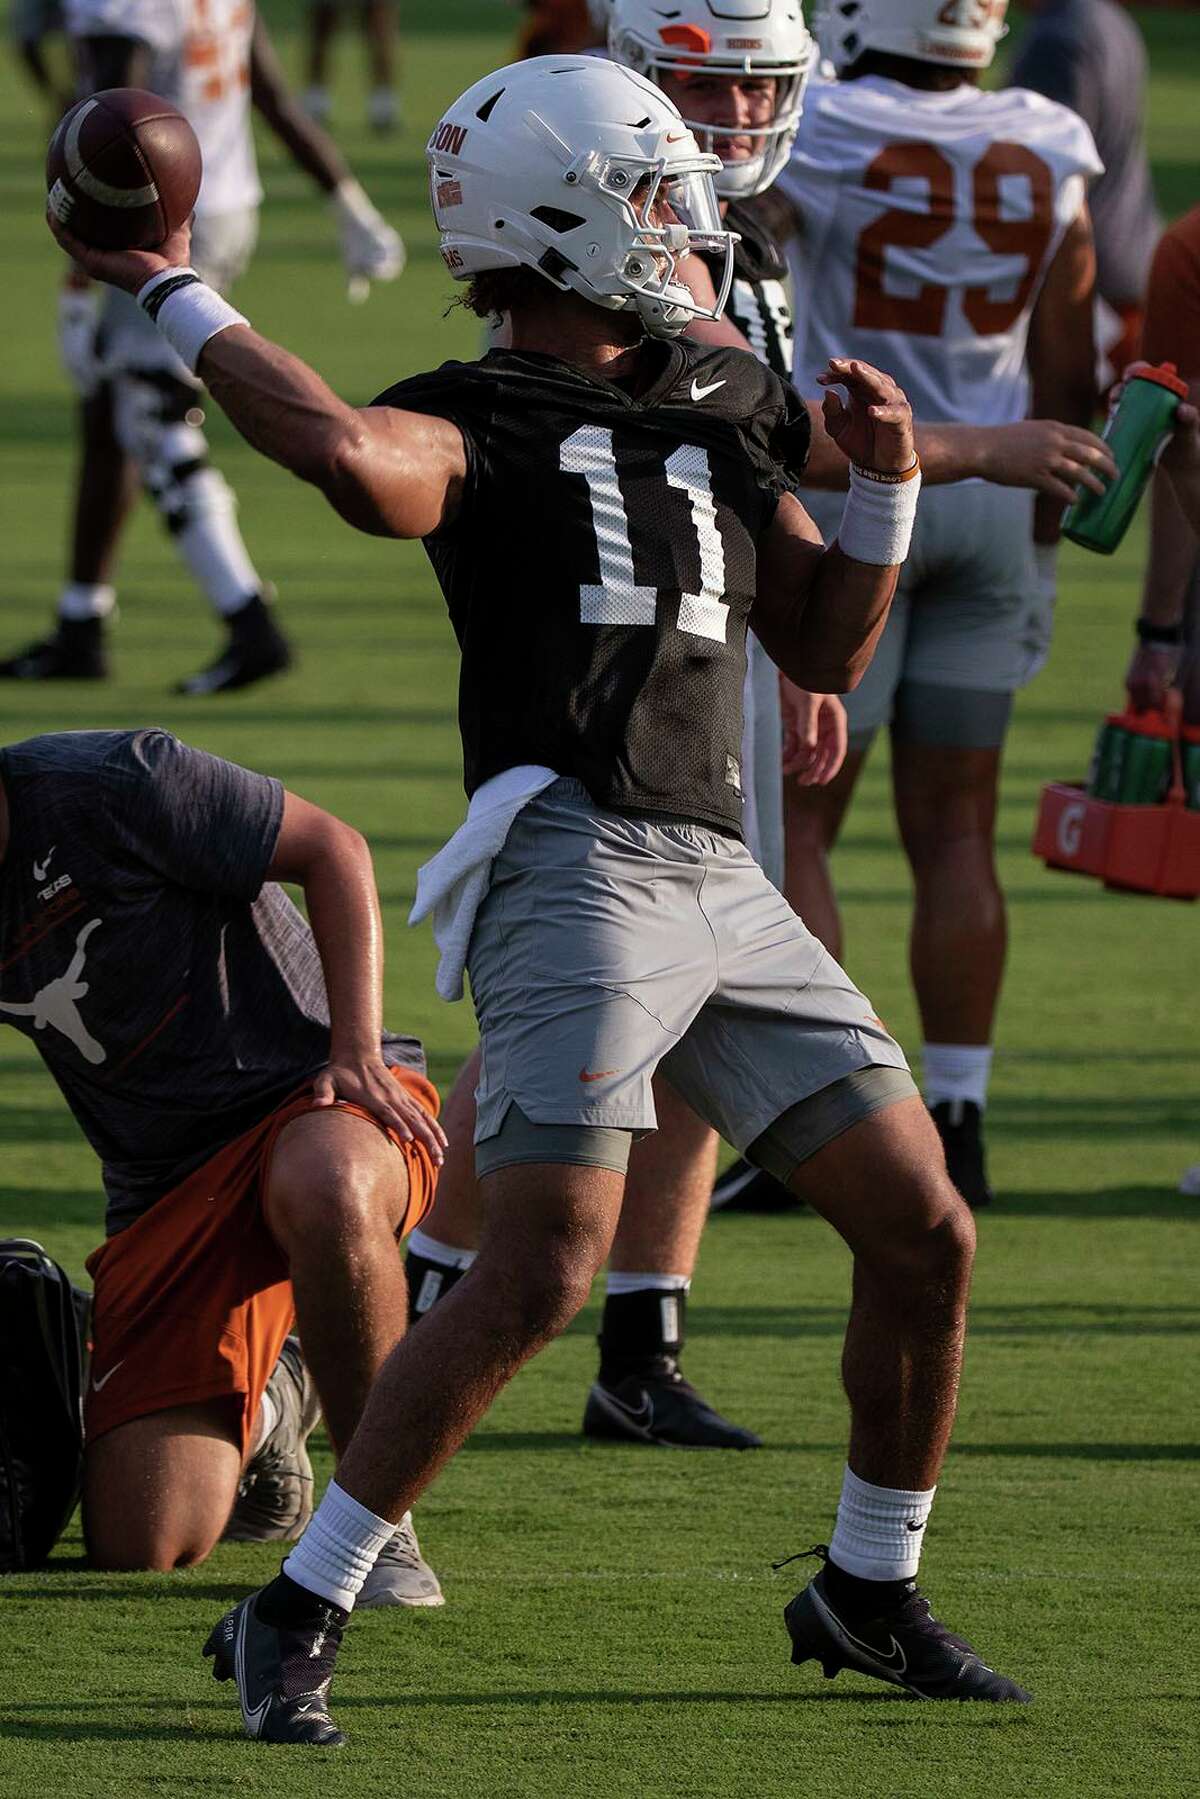 Texas quarterback Casey Thompson passes to a teammate during drills at an NCAA college football practice in Austin, Texas, Friday, Aug. 6, 2021. (Mikala Compton/Austin American-Statesman via AP)